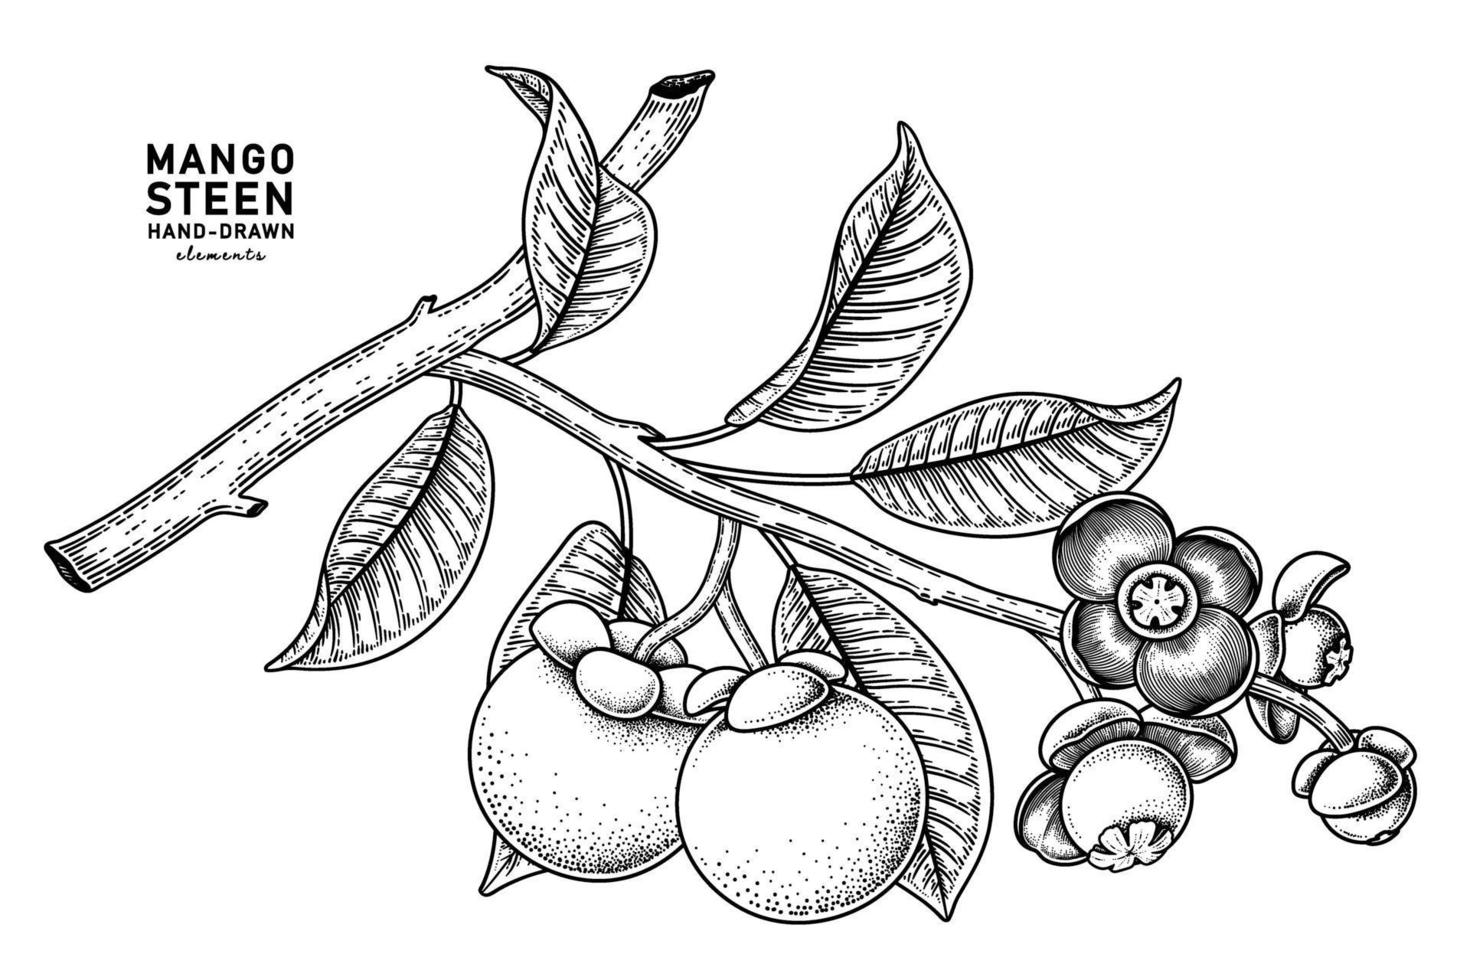 Set of mangosteen fruit hand drawn elements botanical illustration vector